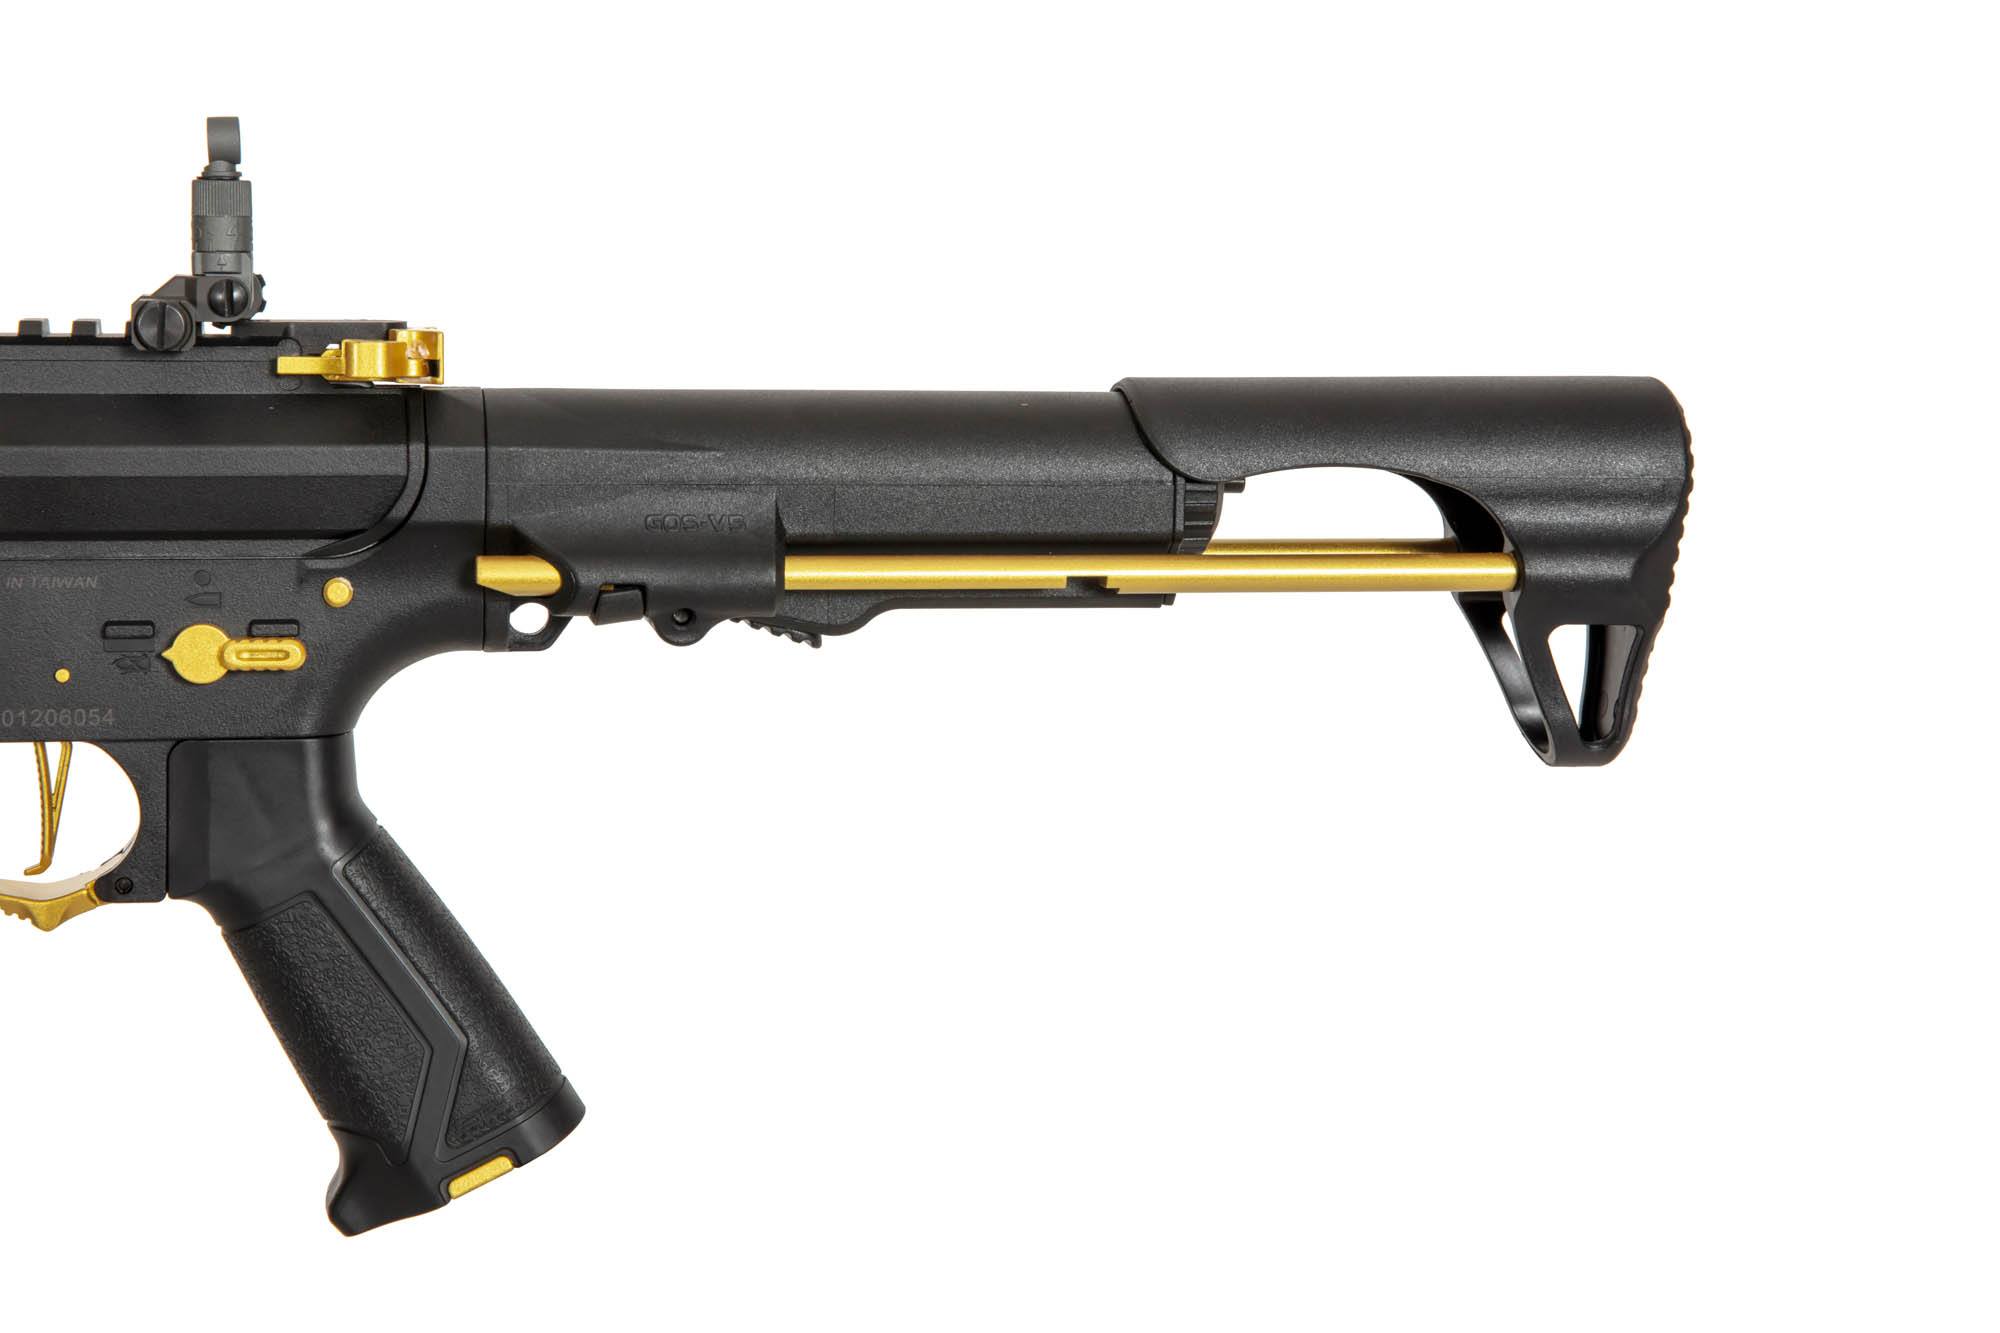 ARP9 G&G submachine gun - Stealth Gold by G&G on Airsoft Mania Europe